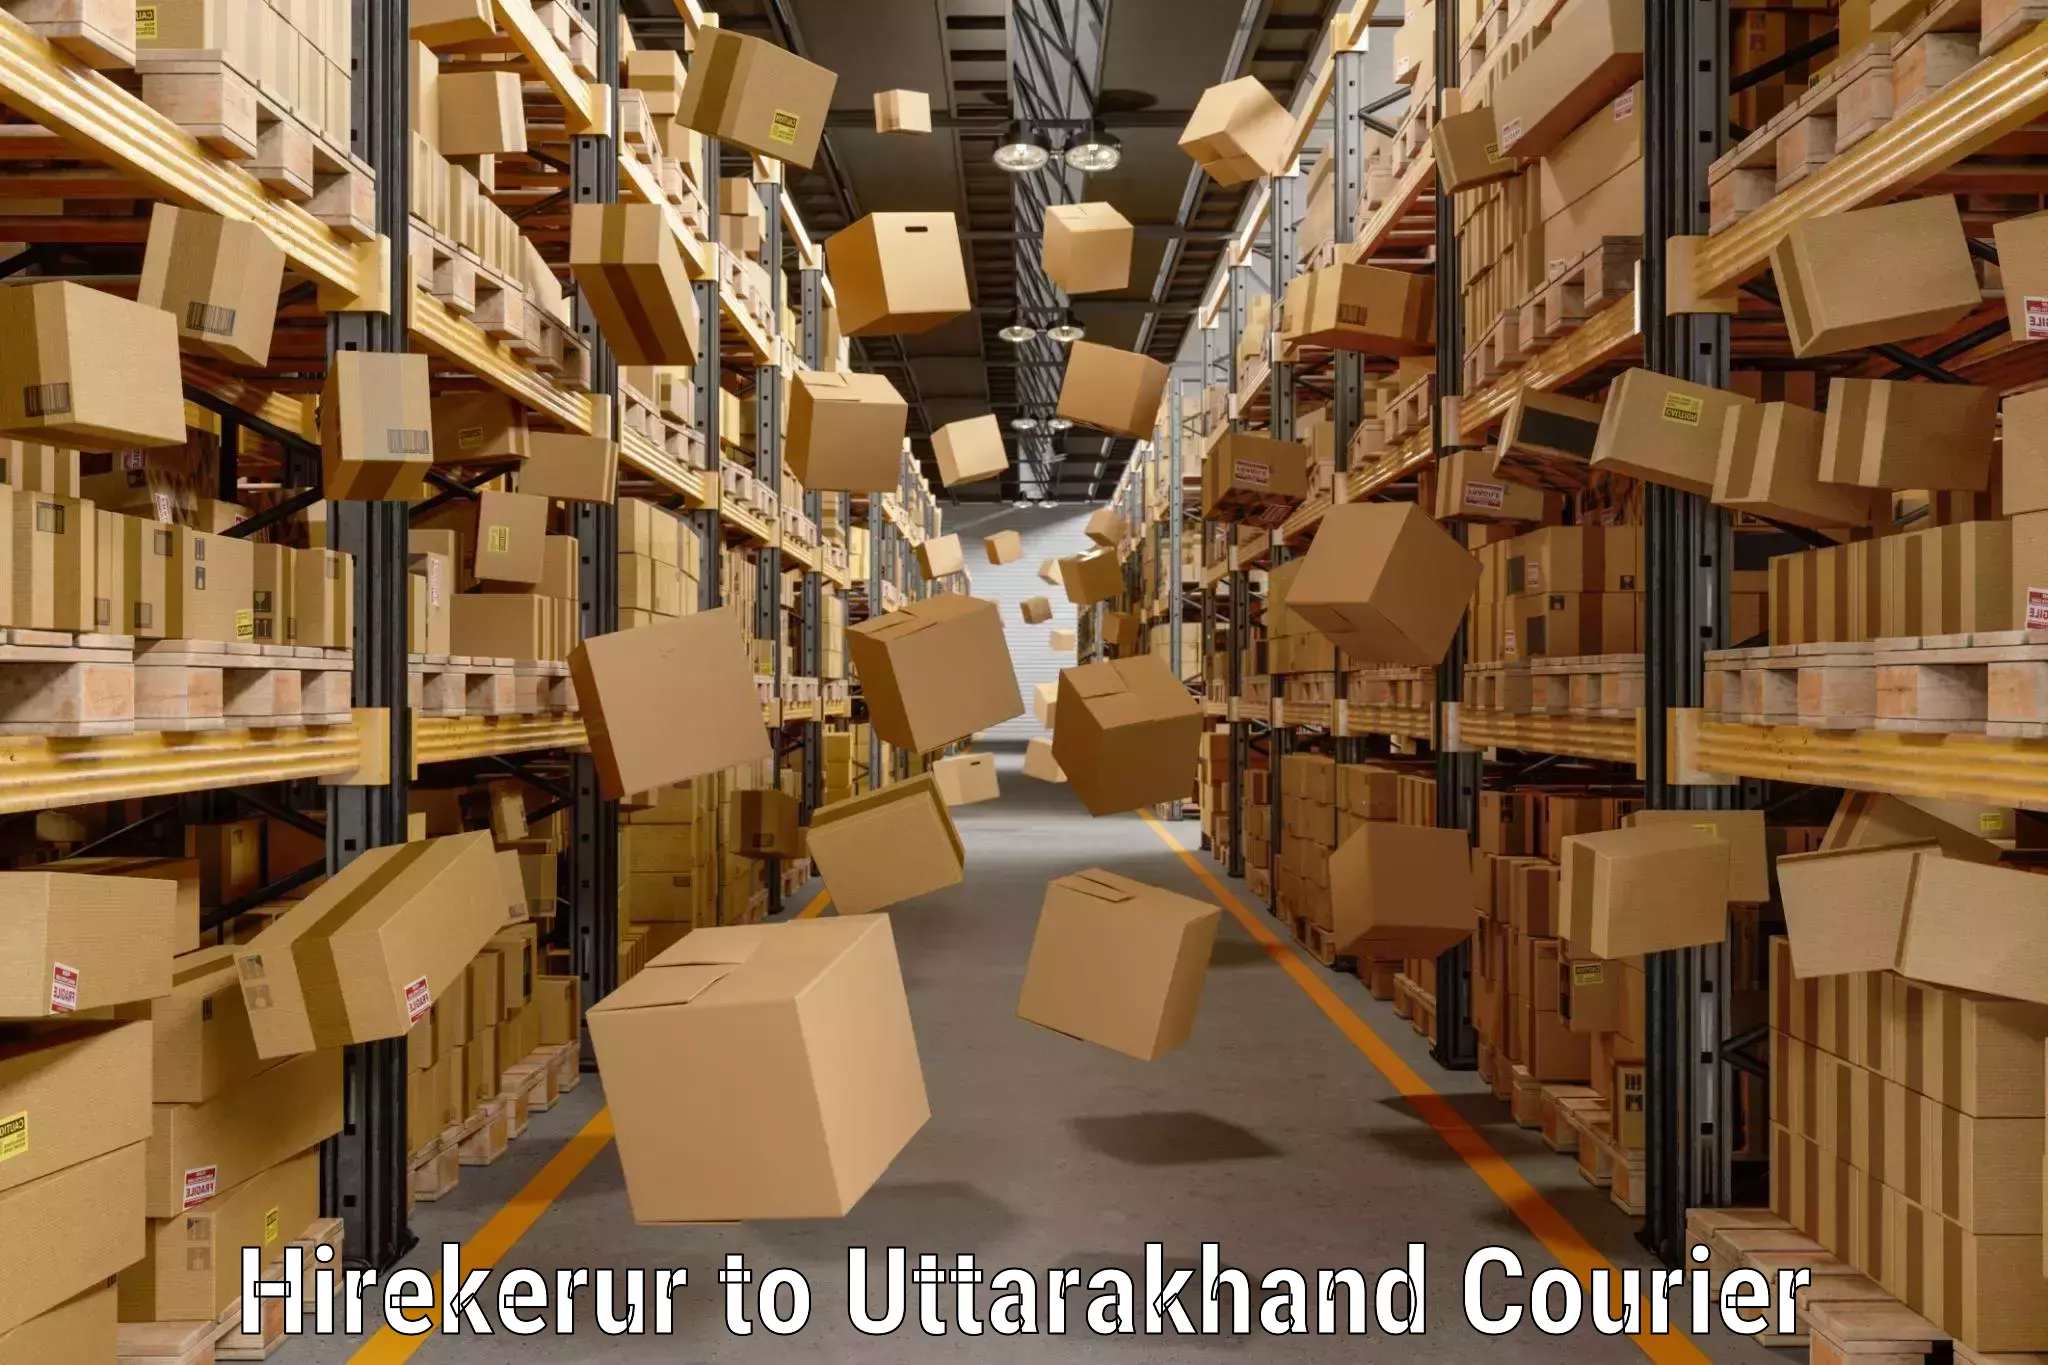 Baggage relocation service Hirekerur to Uttarakhand